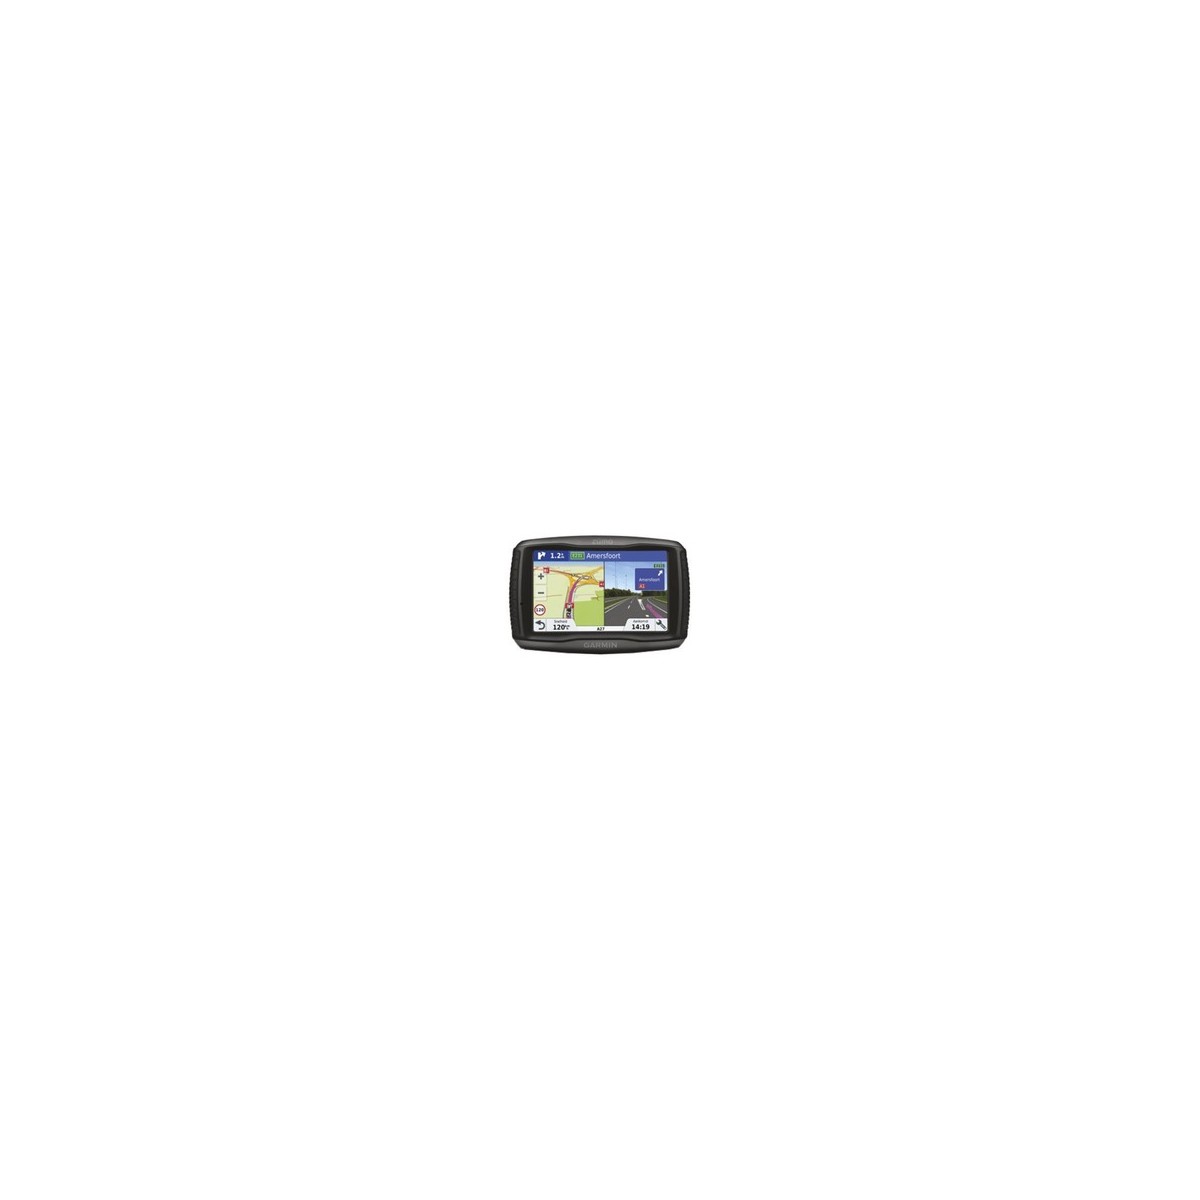 Garmin zmo 595LM Travel - All Europe - 12.7 cm (5) - 800 x 480 pixels - LCD - 64.8 x 108 mm (2.55 x 4.25) - SSD